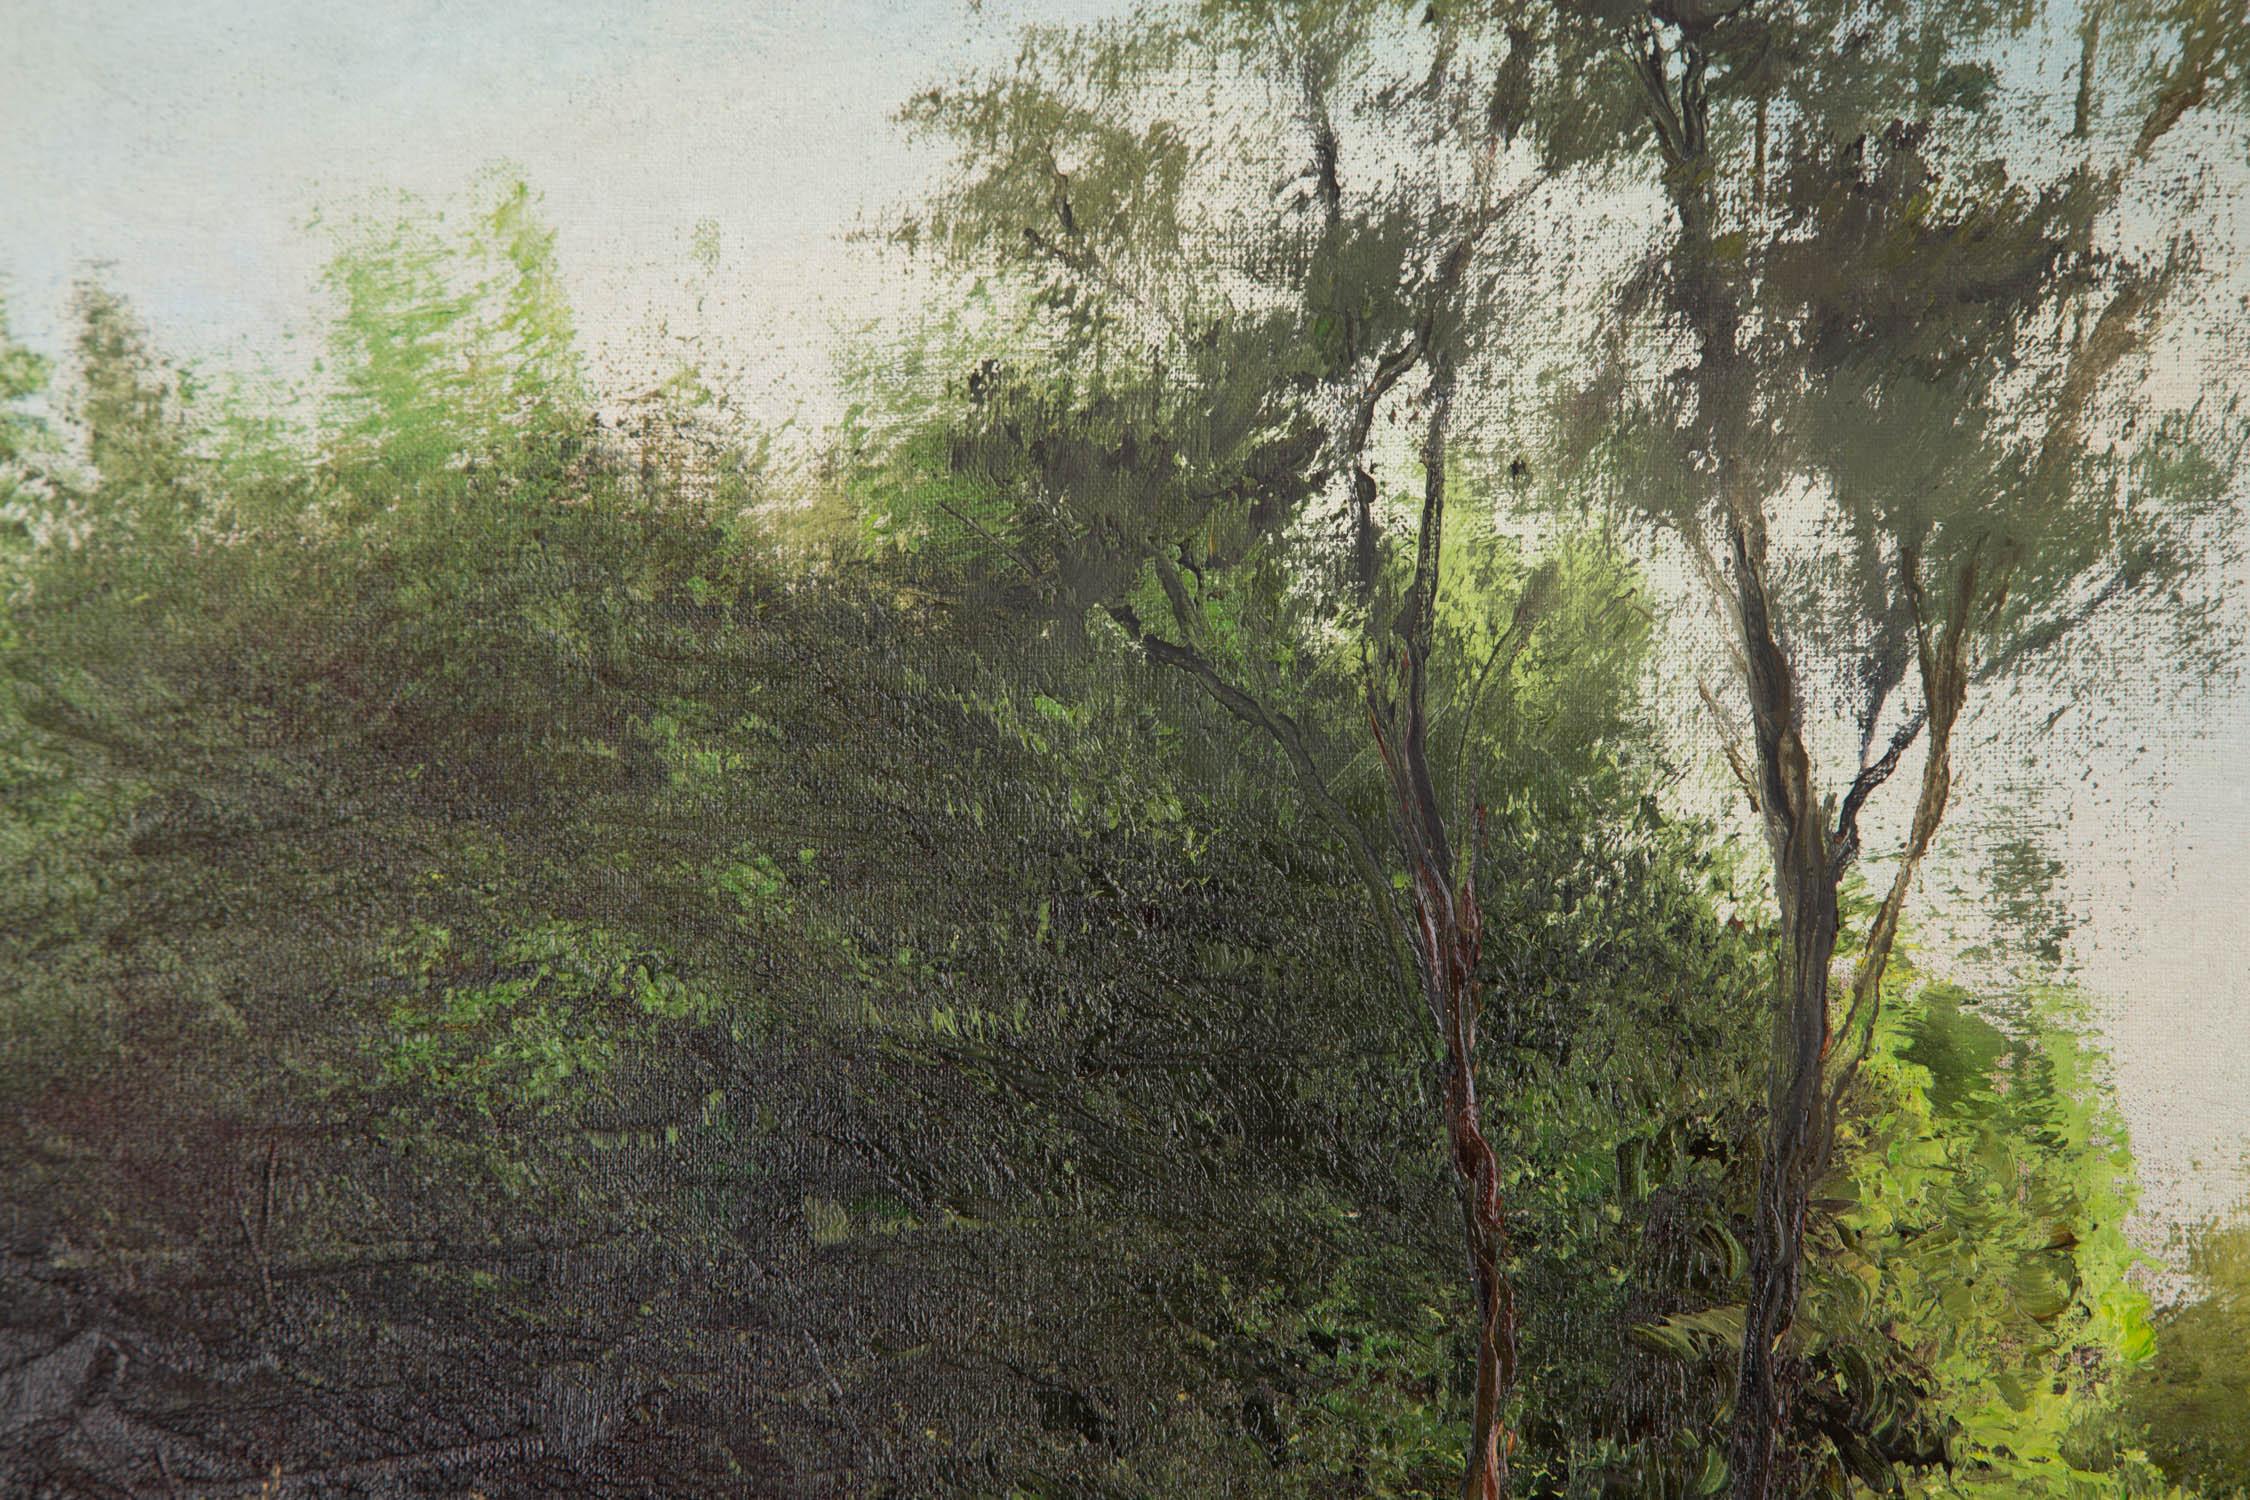 JIanping Chen Impressionist Original Oil On Canvas 